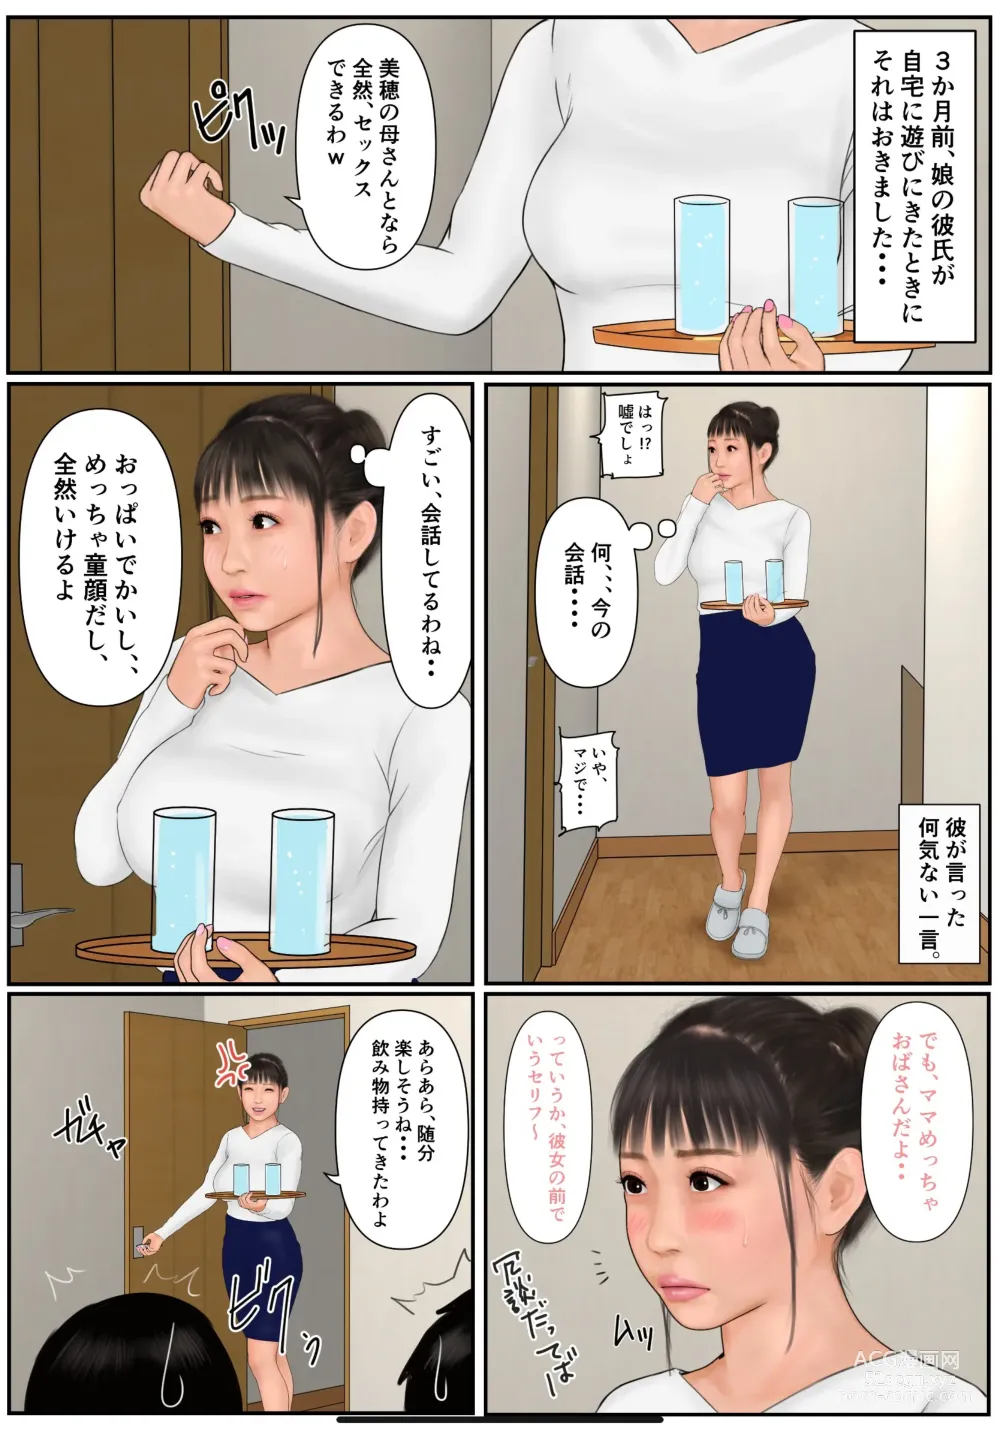 Page 7 of doujinshi Musume no Kareshi ni Oboreta Haha